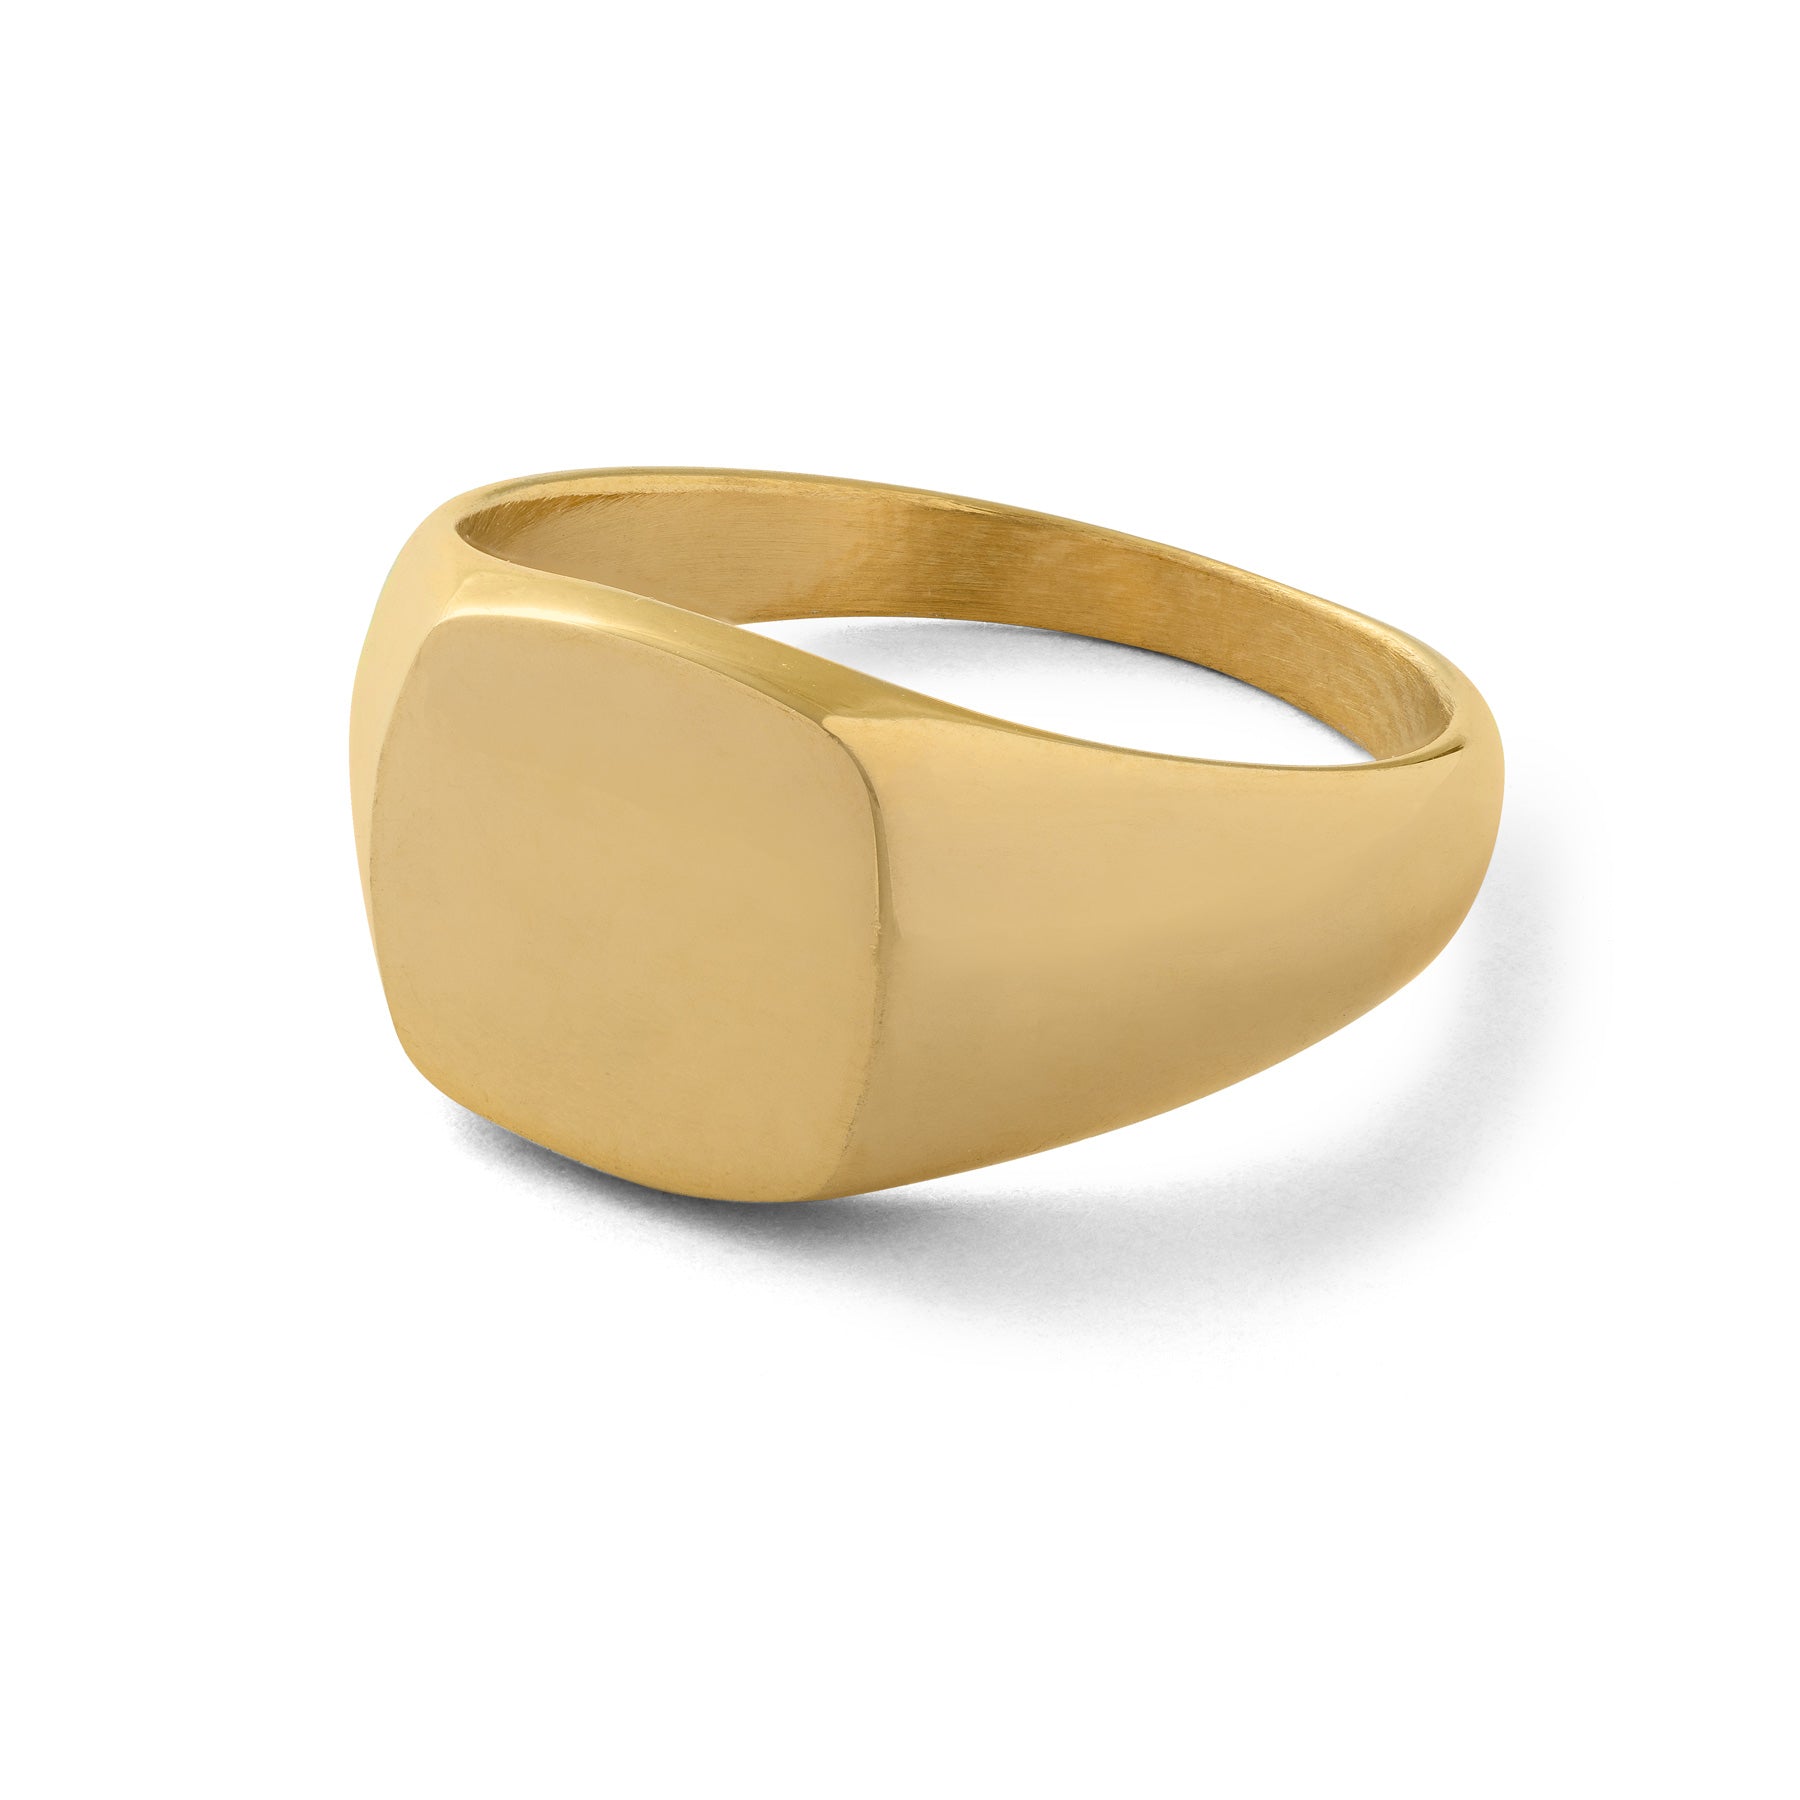 Statement minimalist gold signet ring on white background